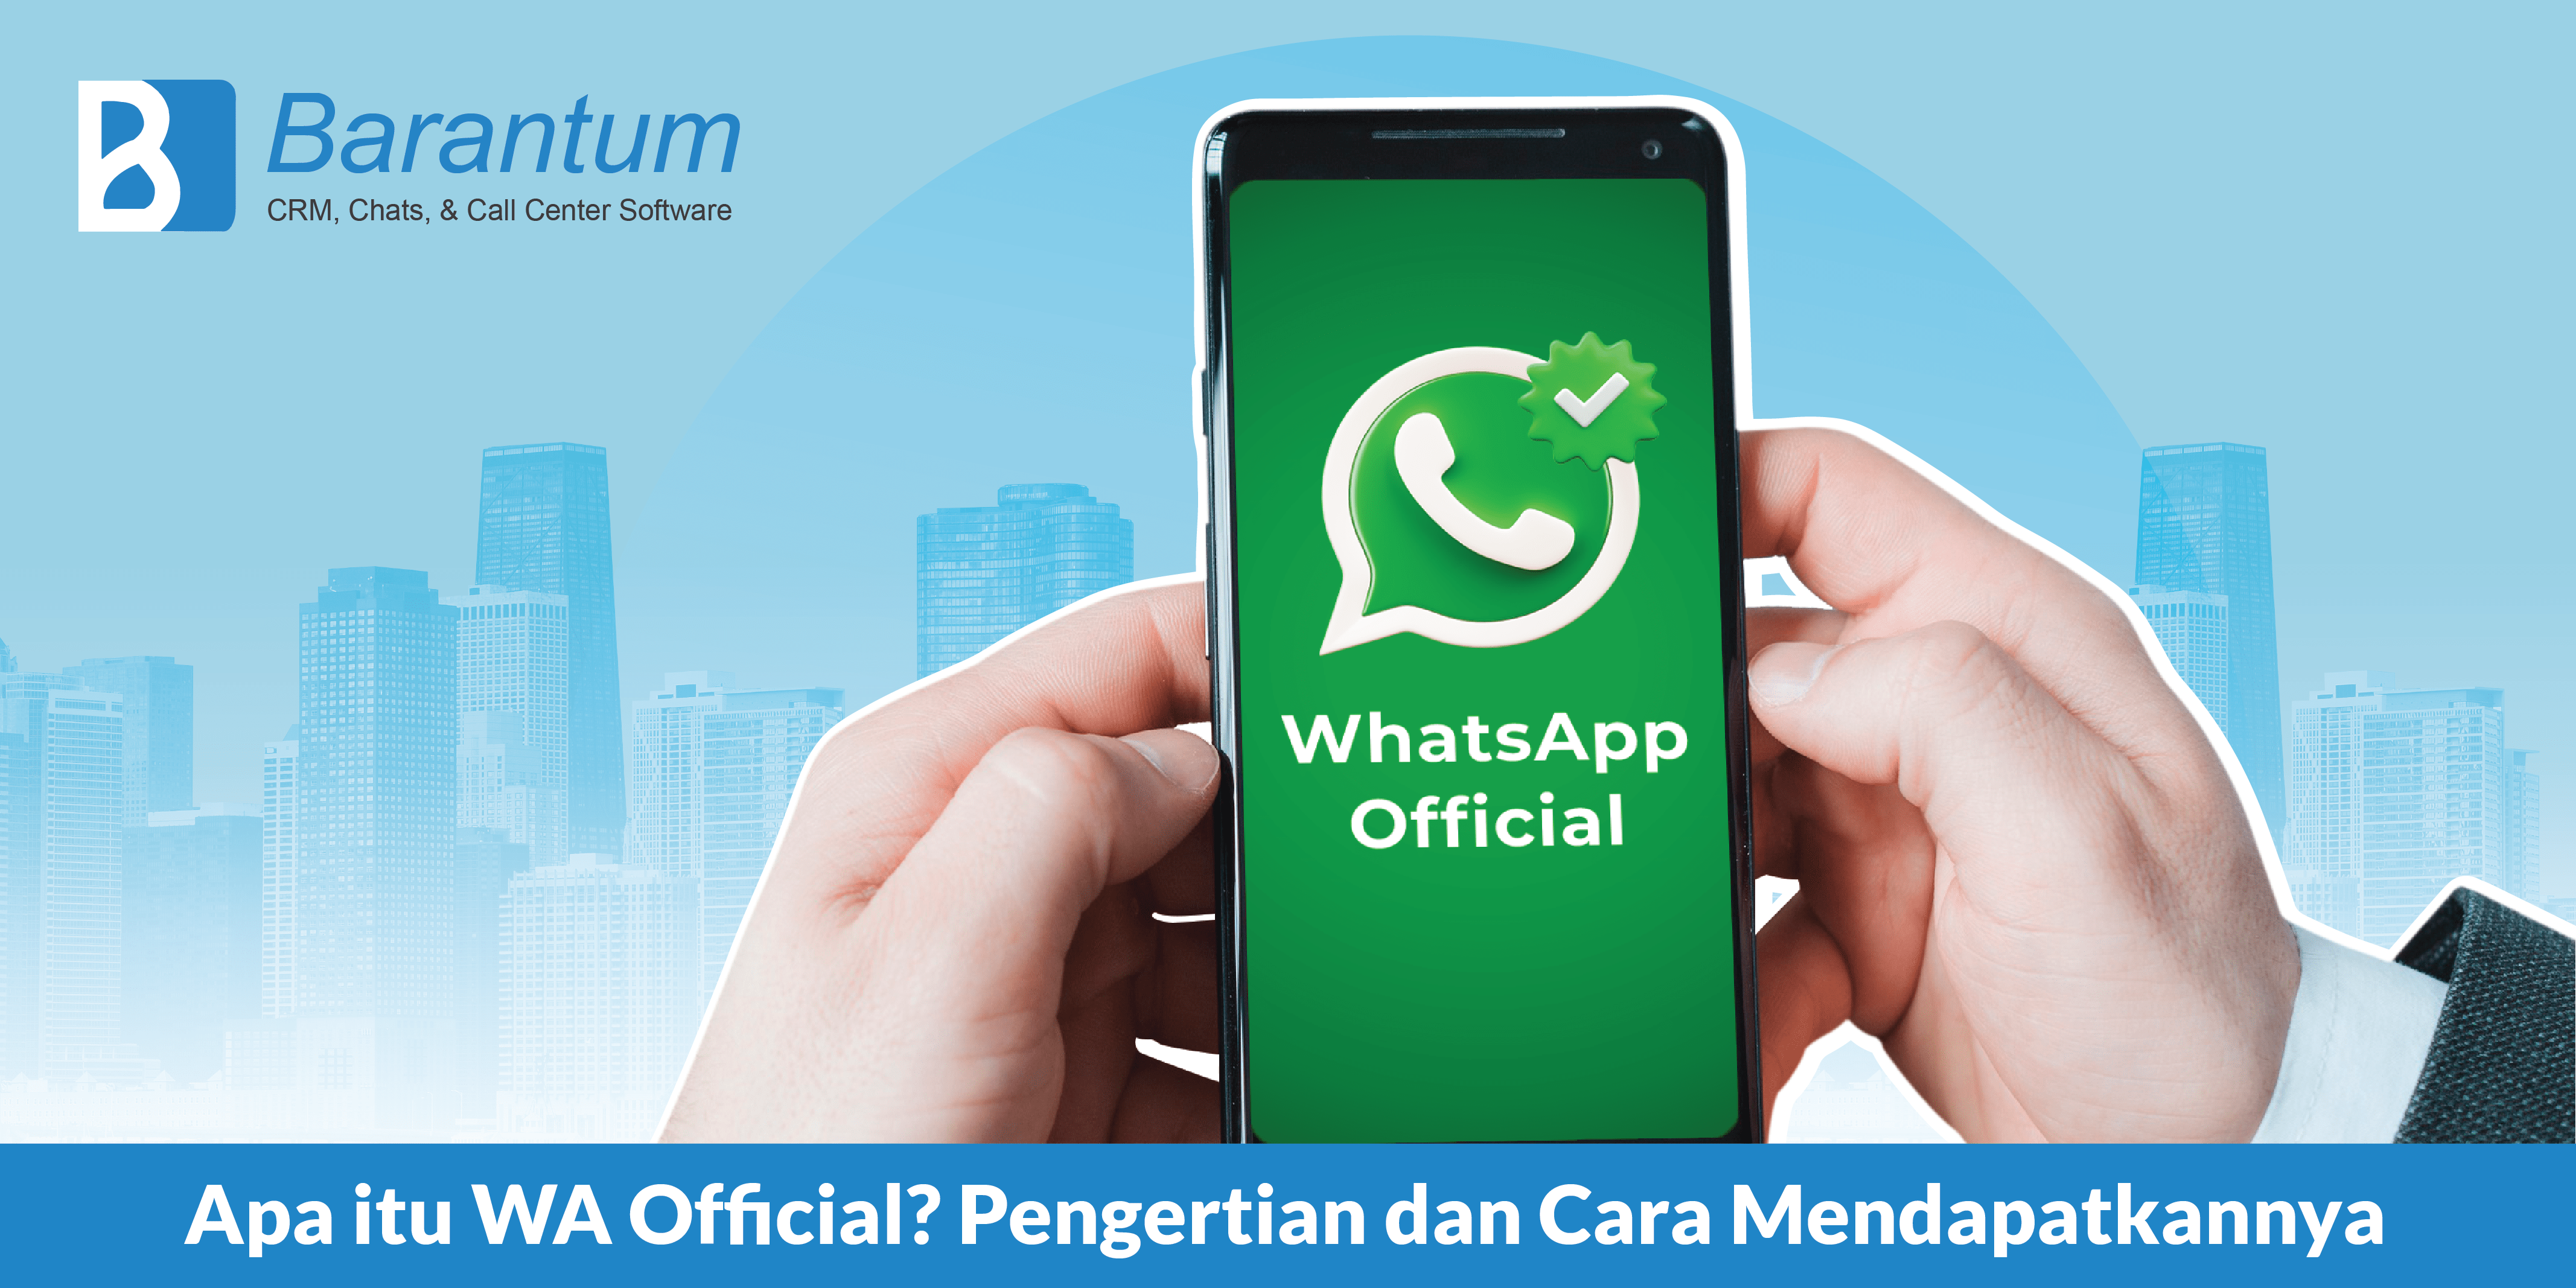 WA official - BSP Resmi WhatsApp Barantum